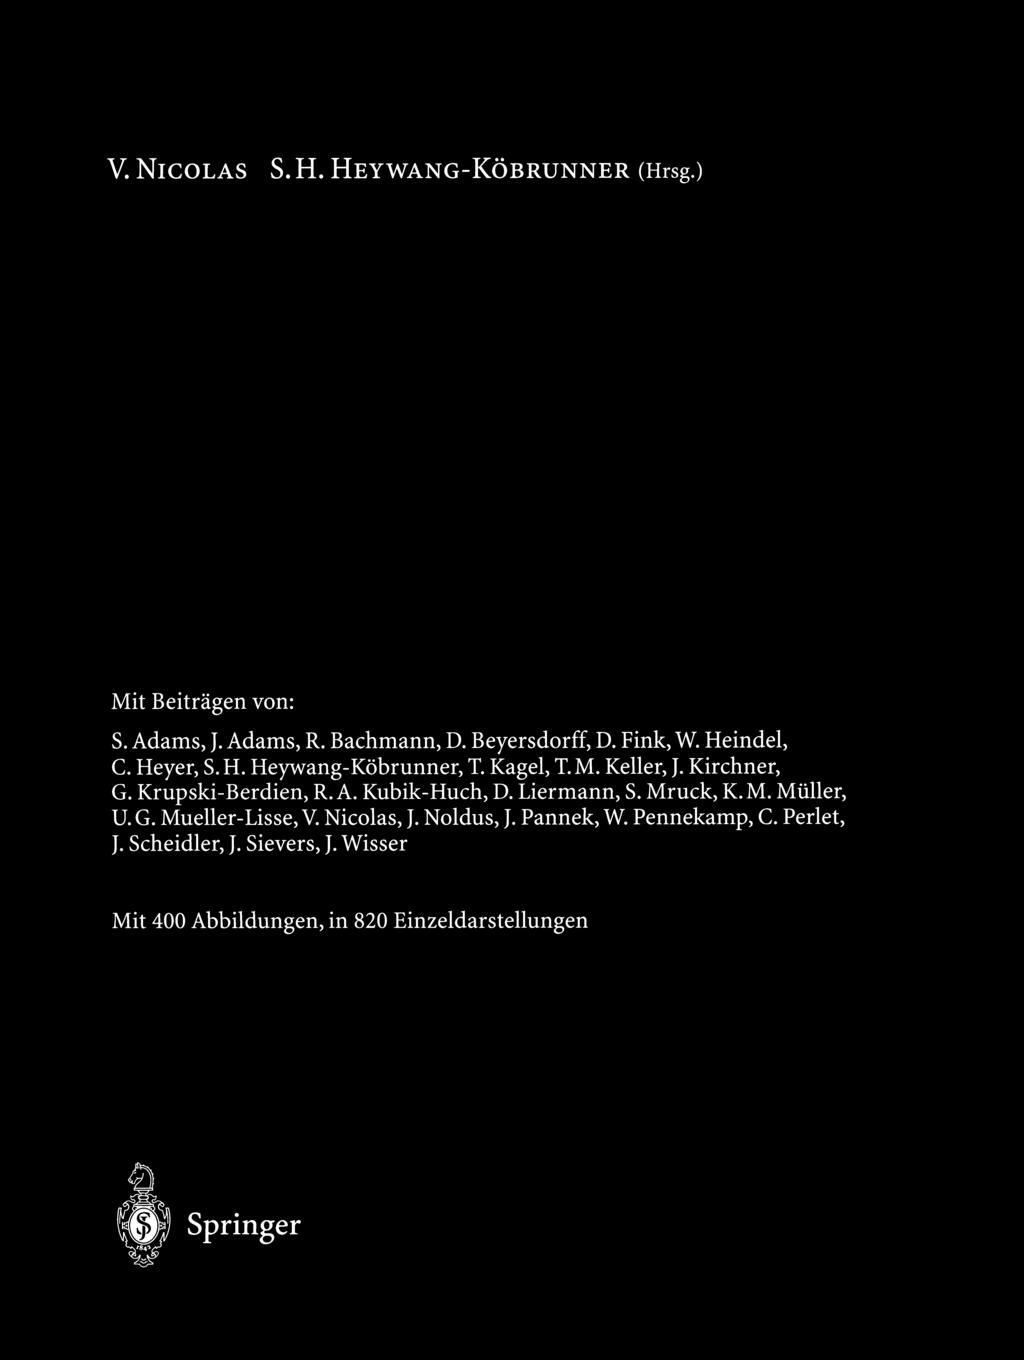 v. NICOLAS S. H. HEYWANG-KOBRUNNER (Hrsg.